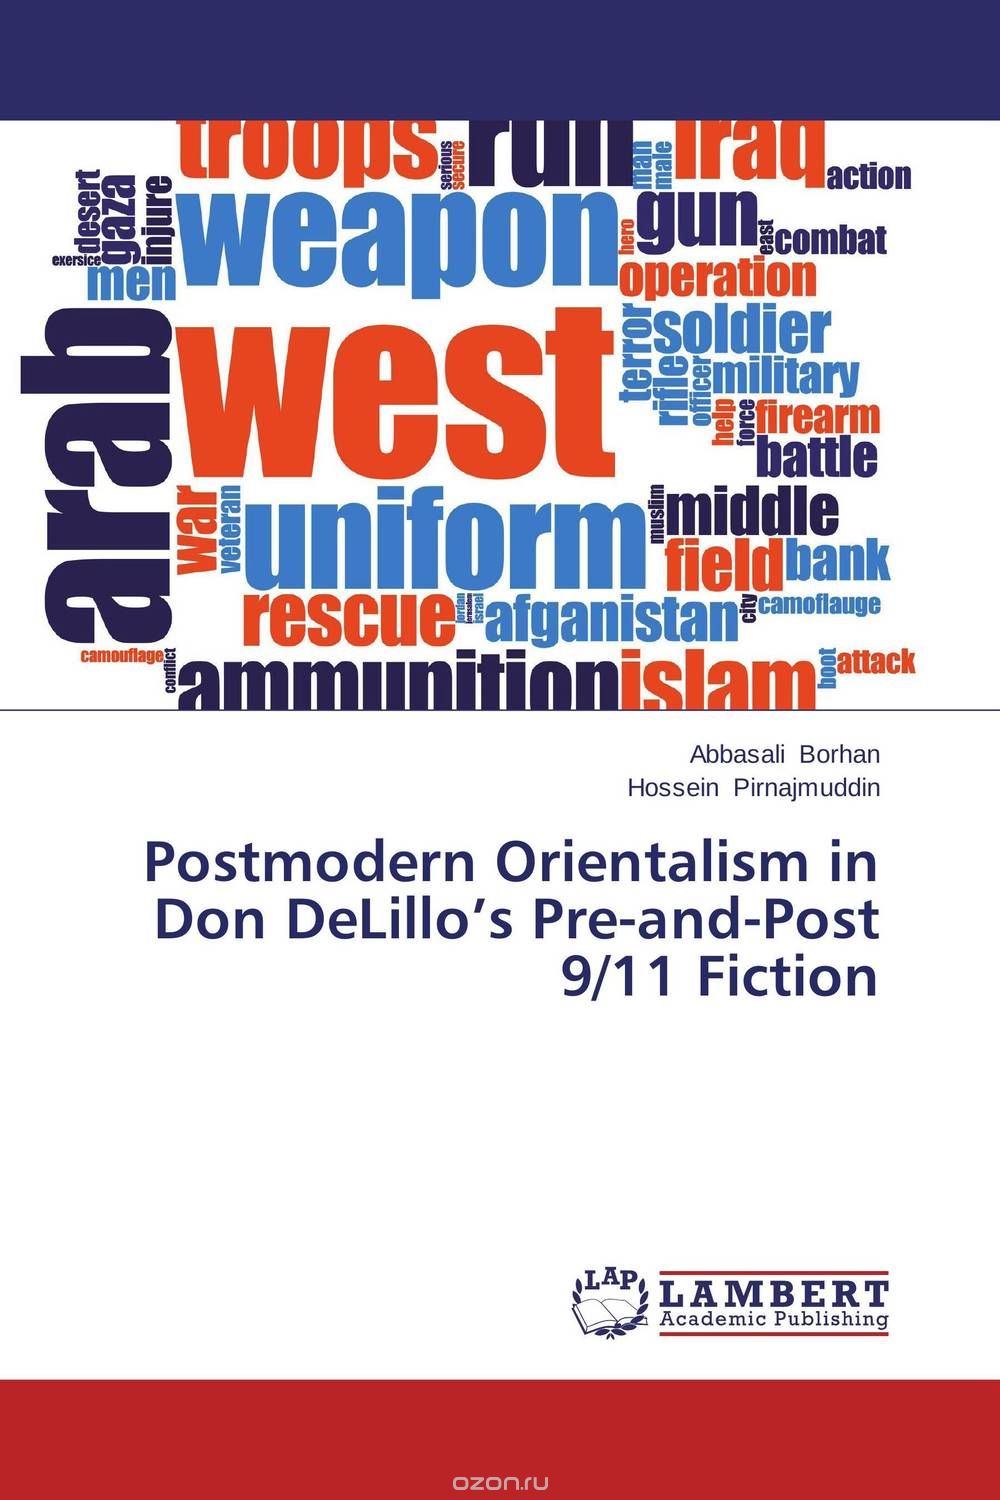 Скачать книгу "Postmodern Orientalism in Don DeLillo’s Pre-and-Post 9/11 Fiction"